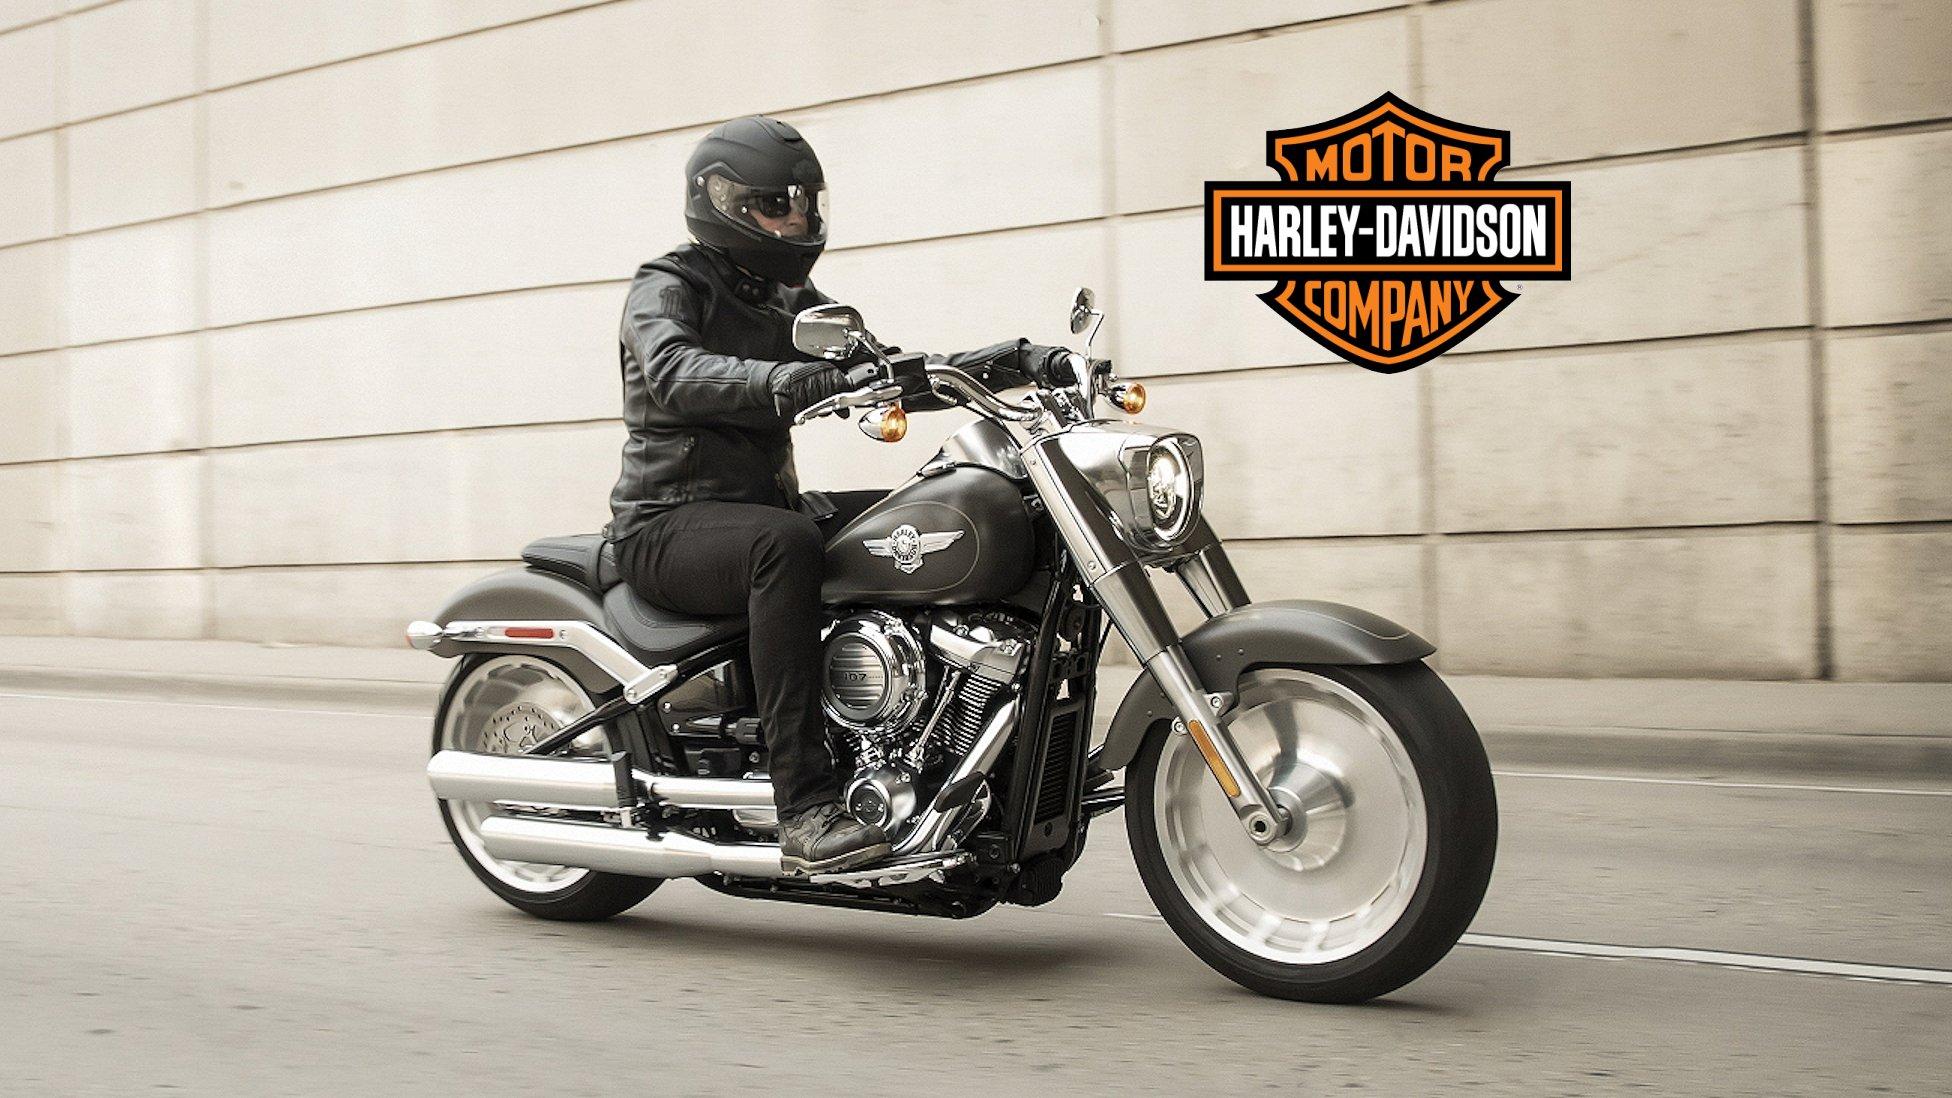 2019 Harley Davidson Fat Boy Picture, Photo